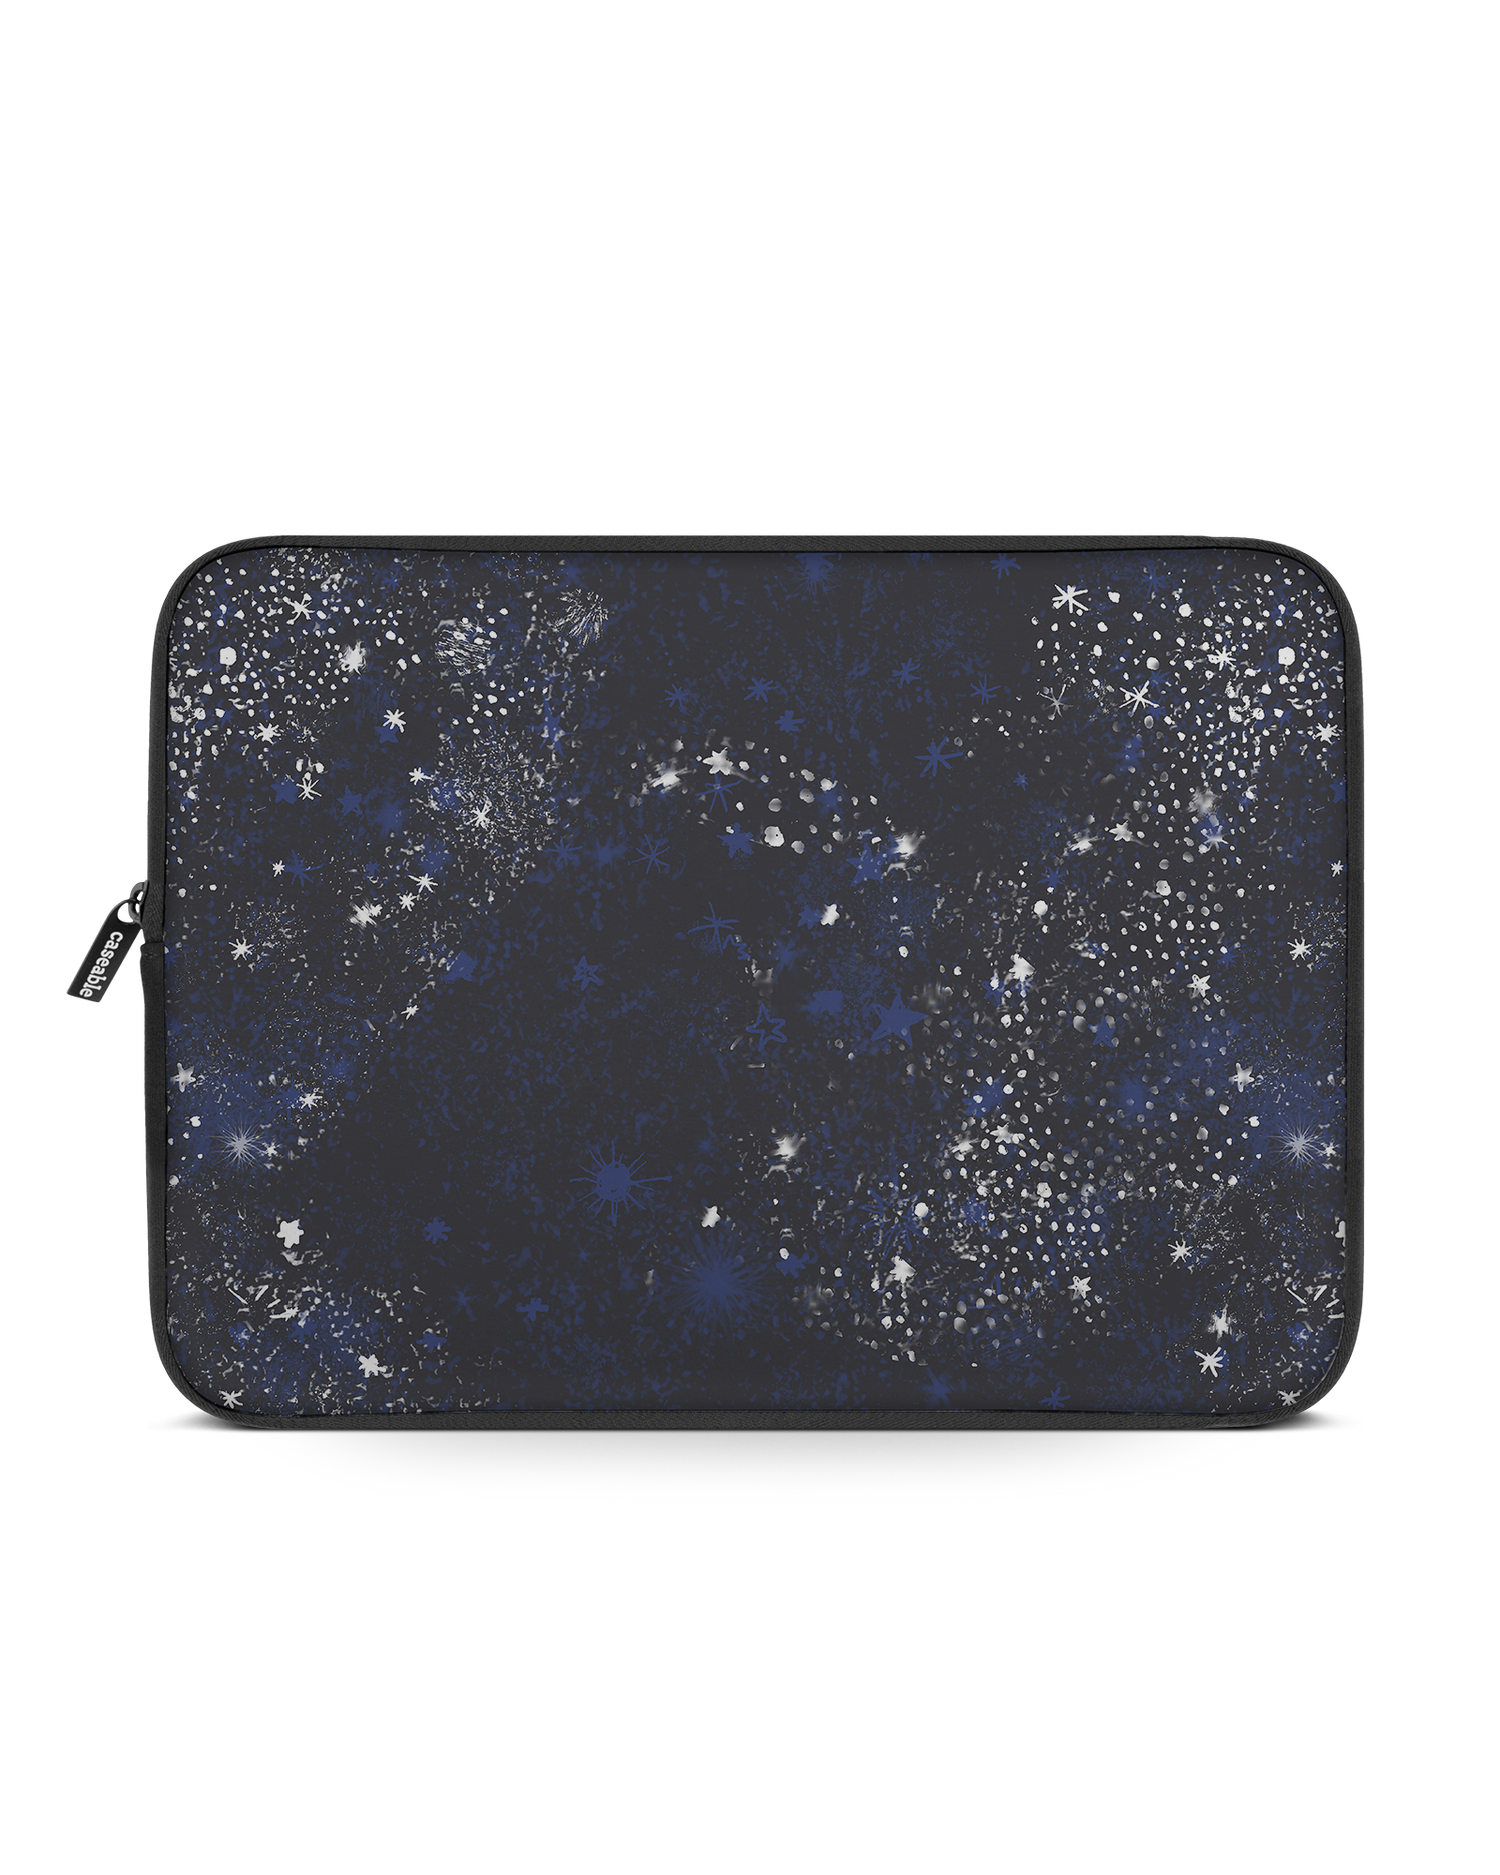 Starry Night Sky Laptophülle 15 Zoll: Vorderansicht